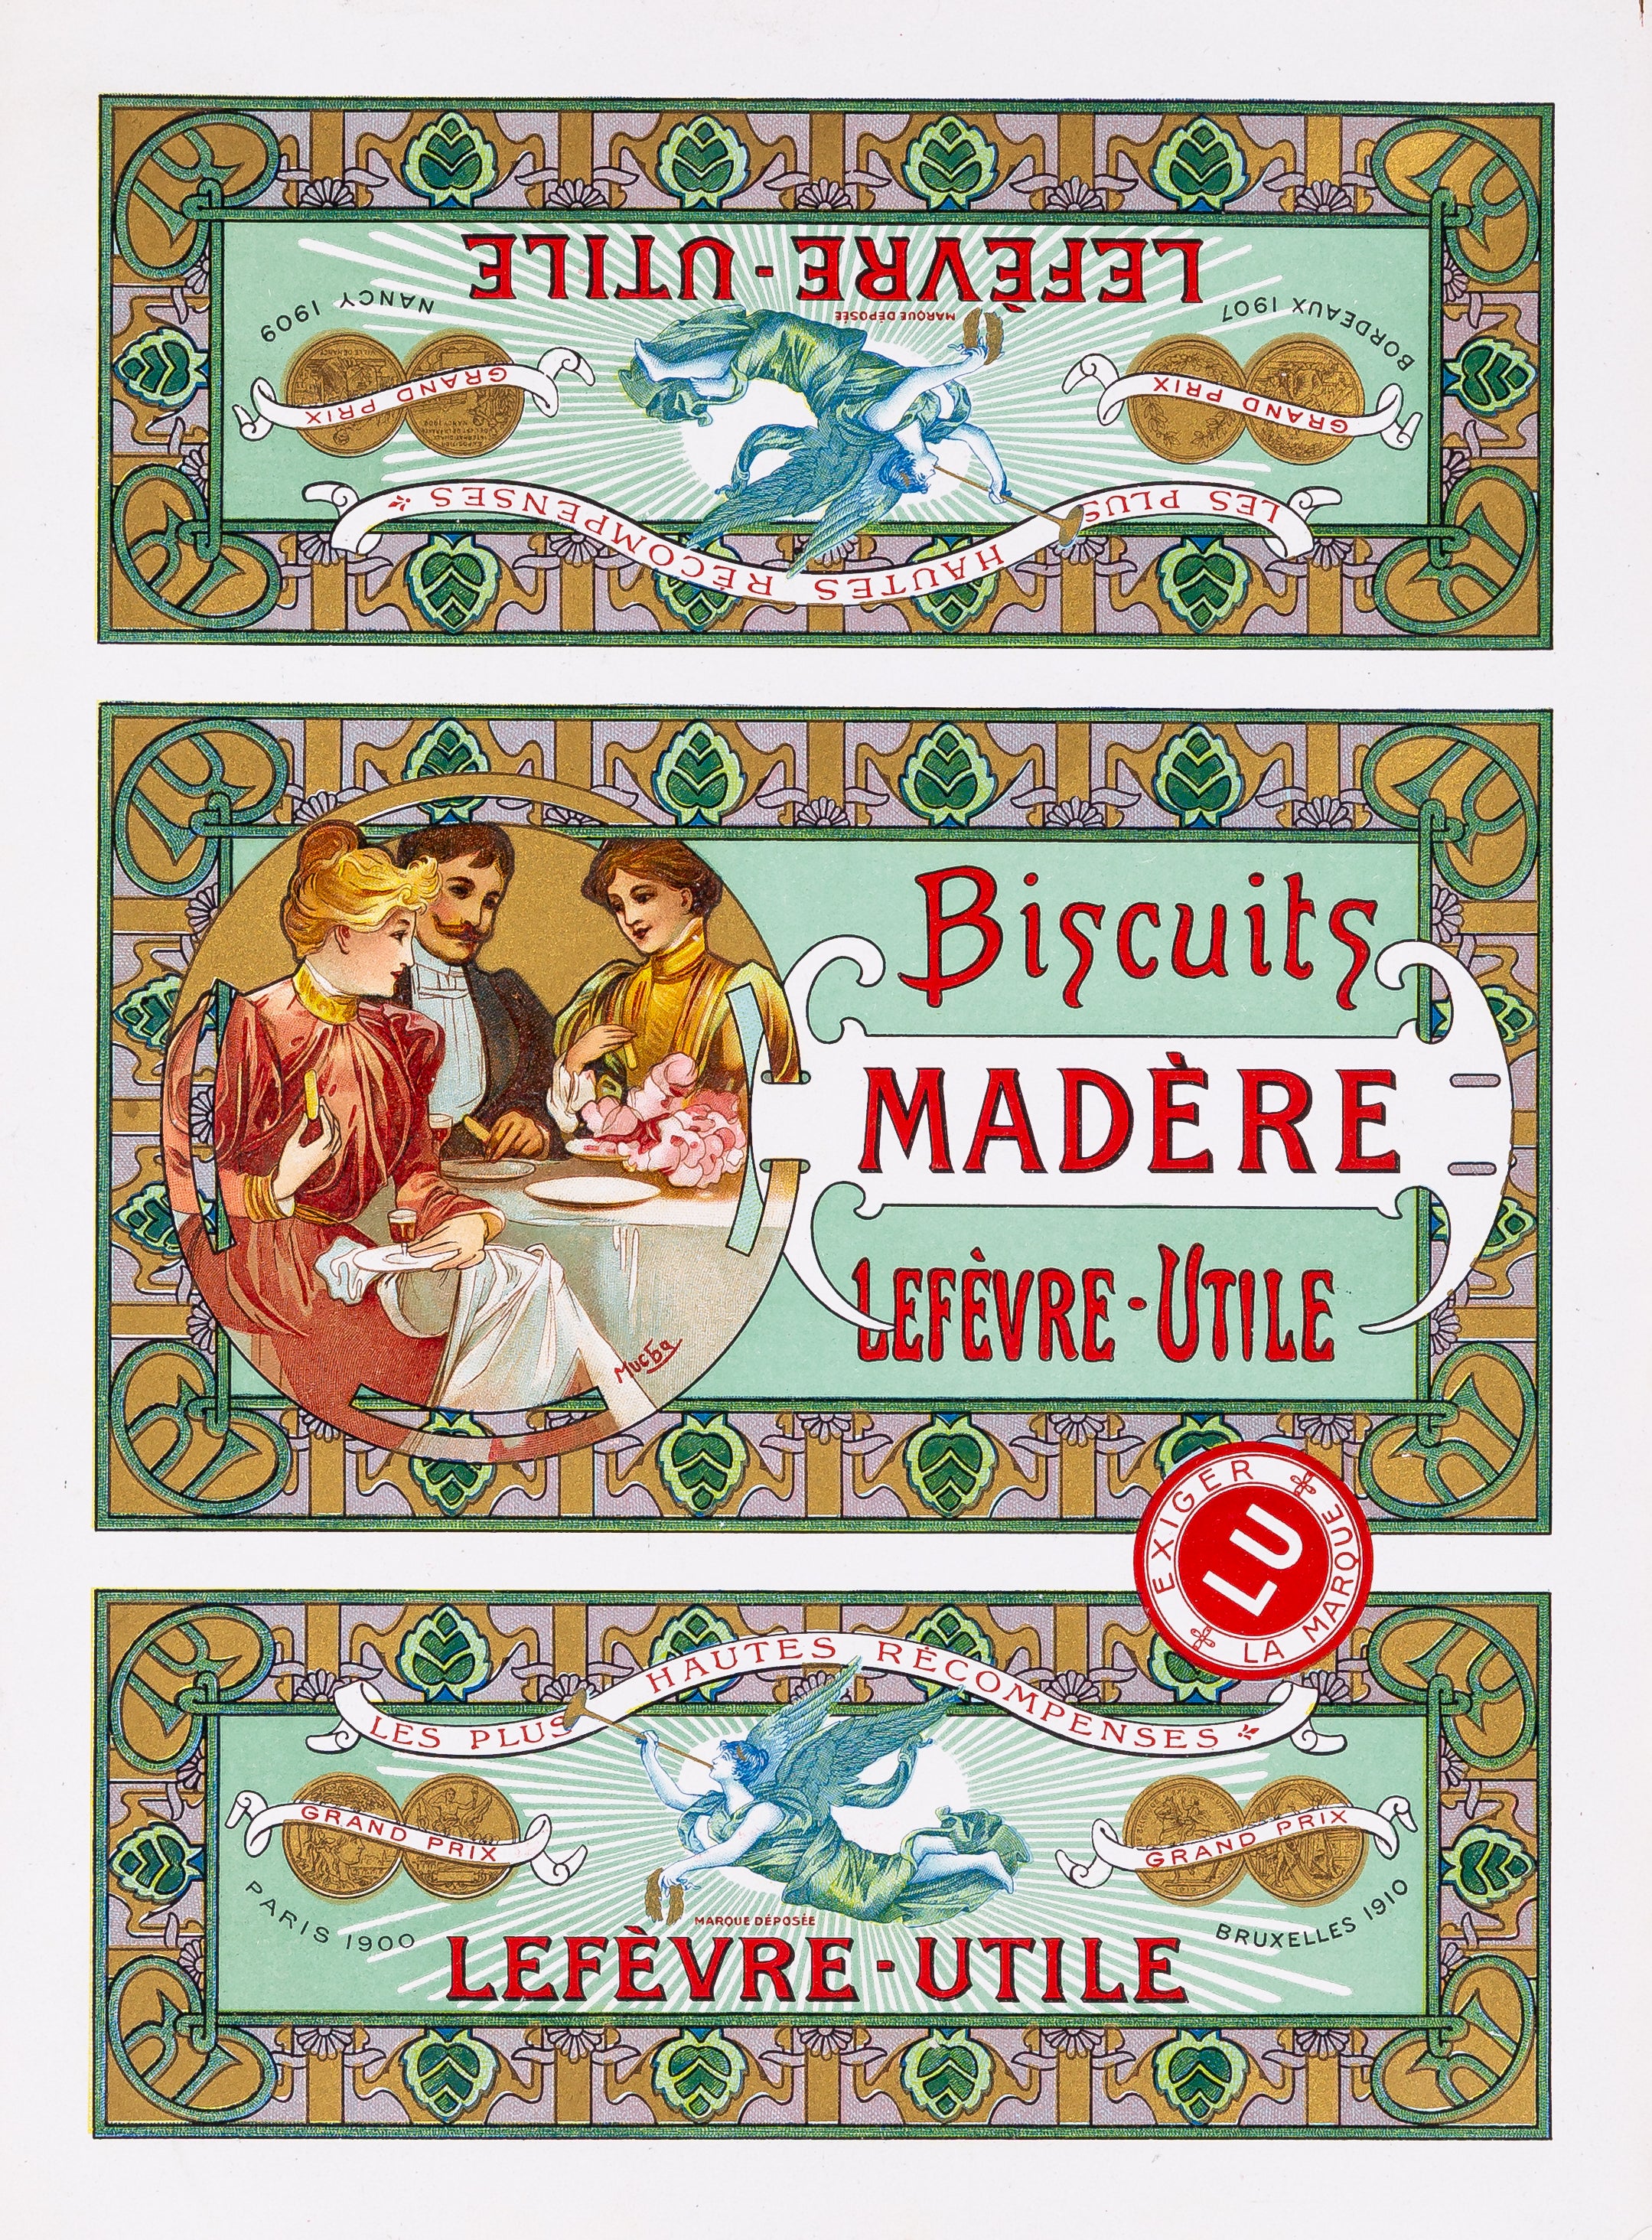 lu lu biscuits lefevre utile – Poster Museum